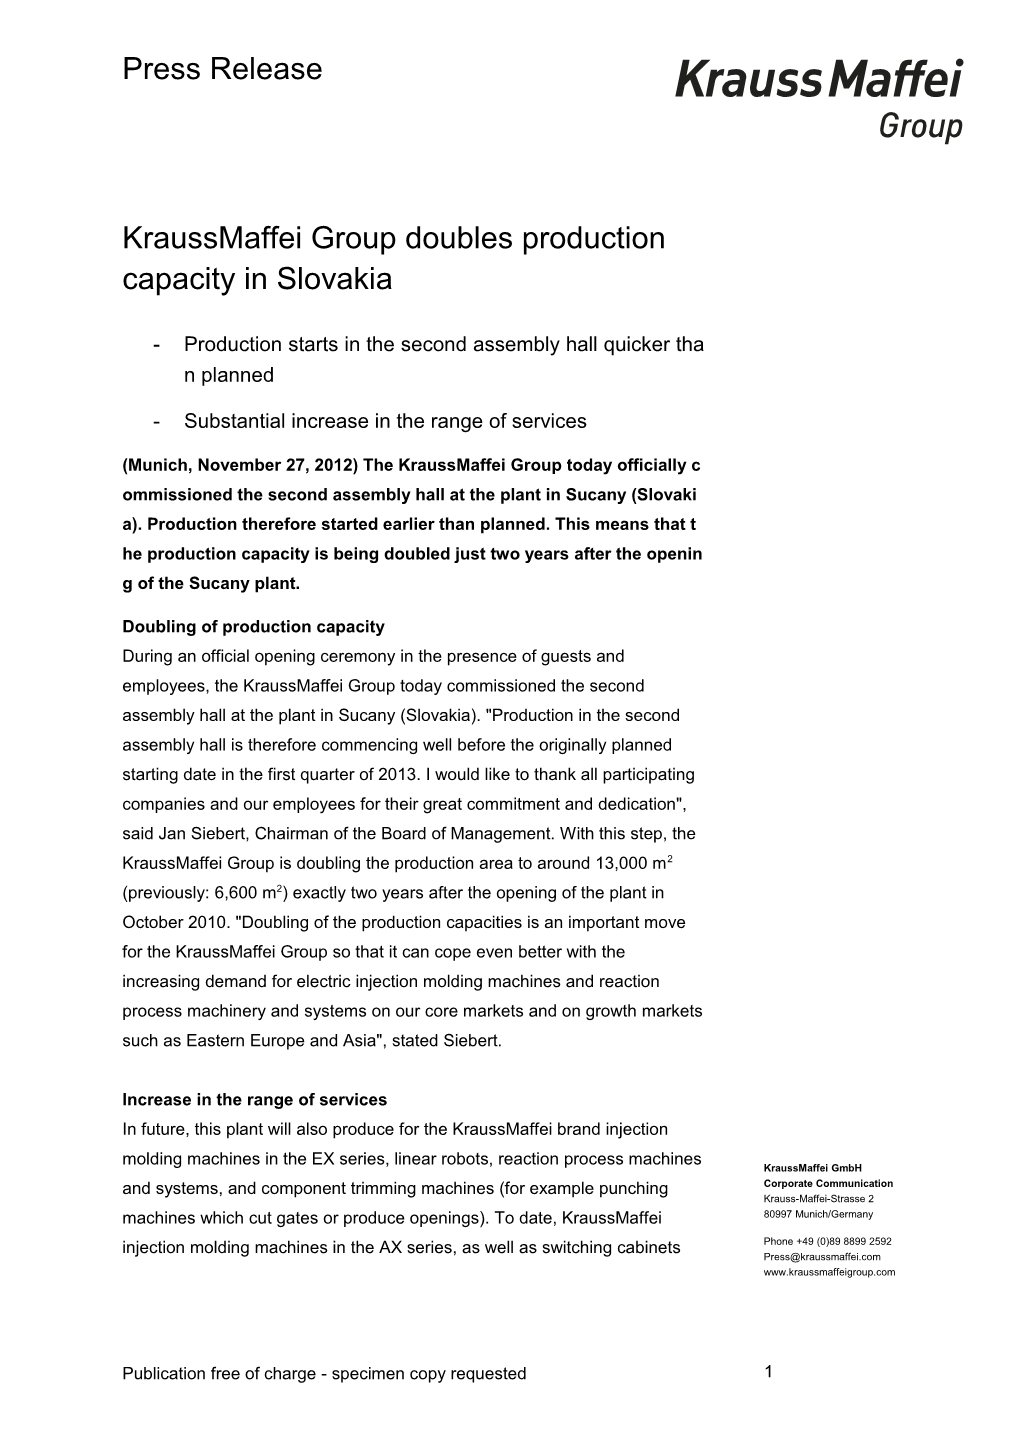 Kraussmaffei Group Doubles Production Capacity in Slovakia